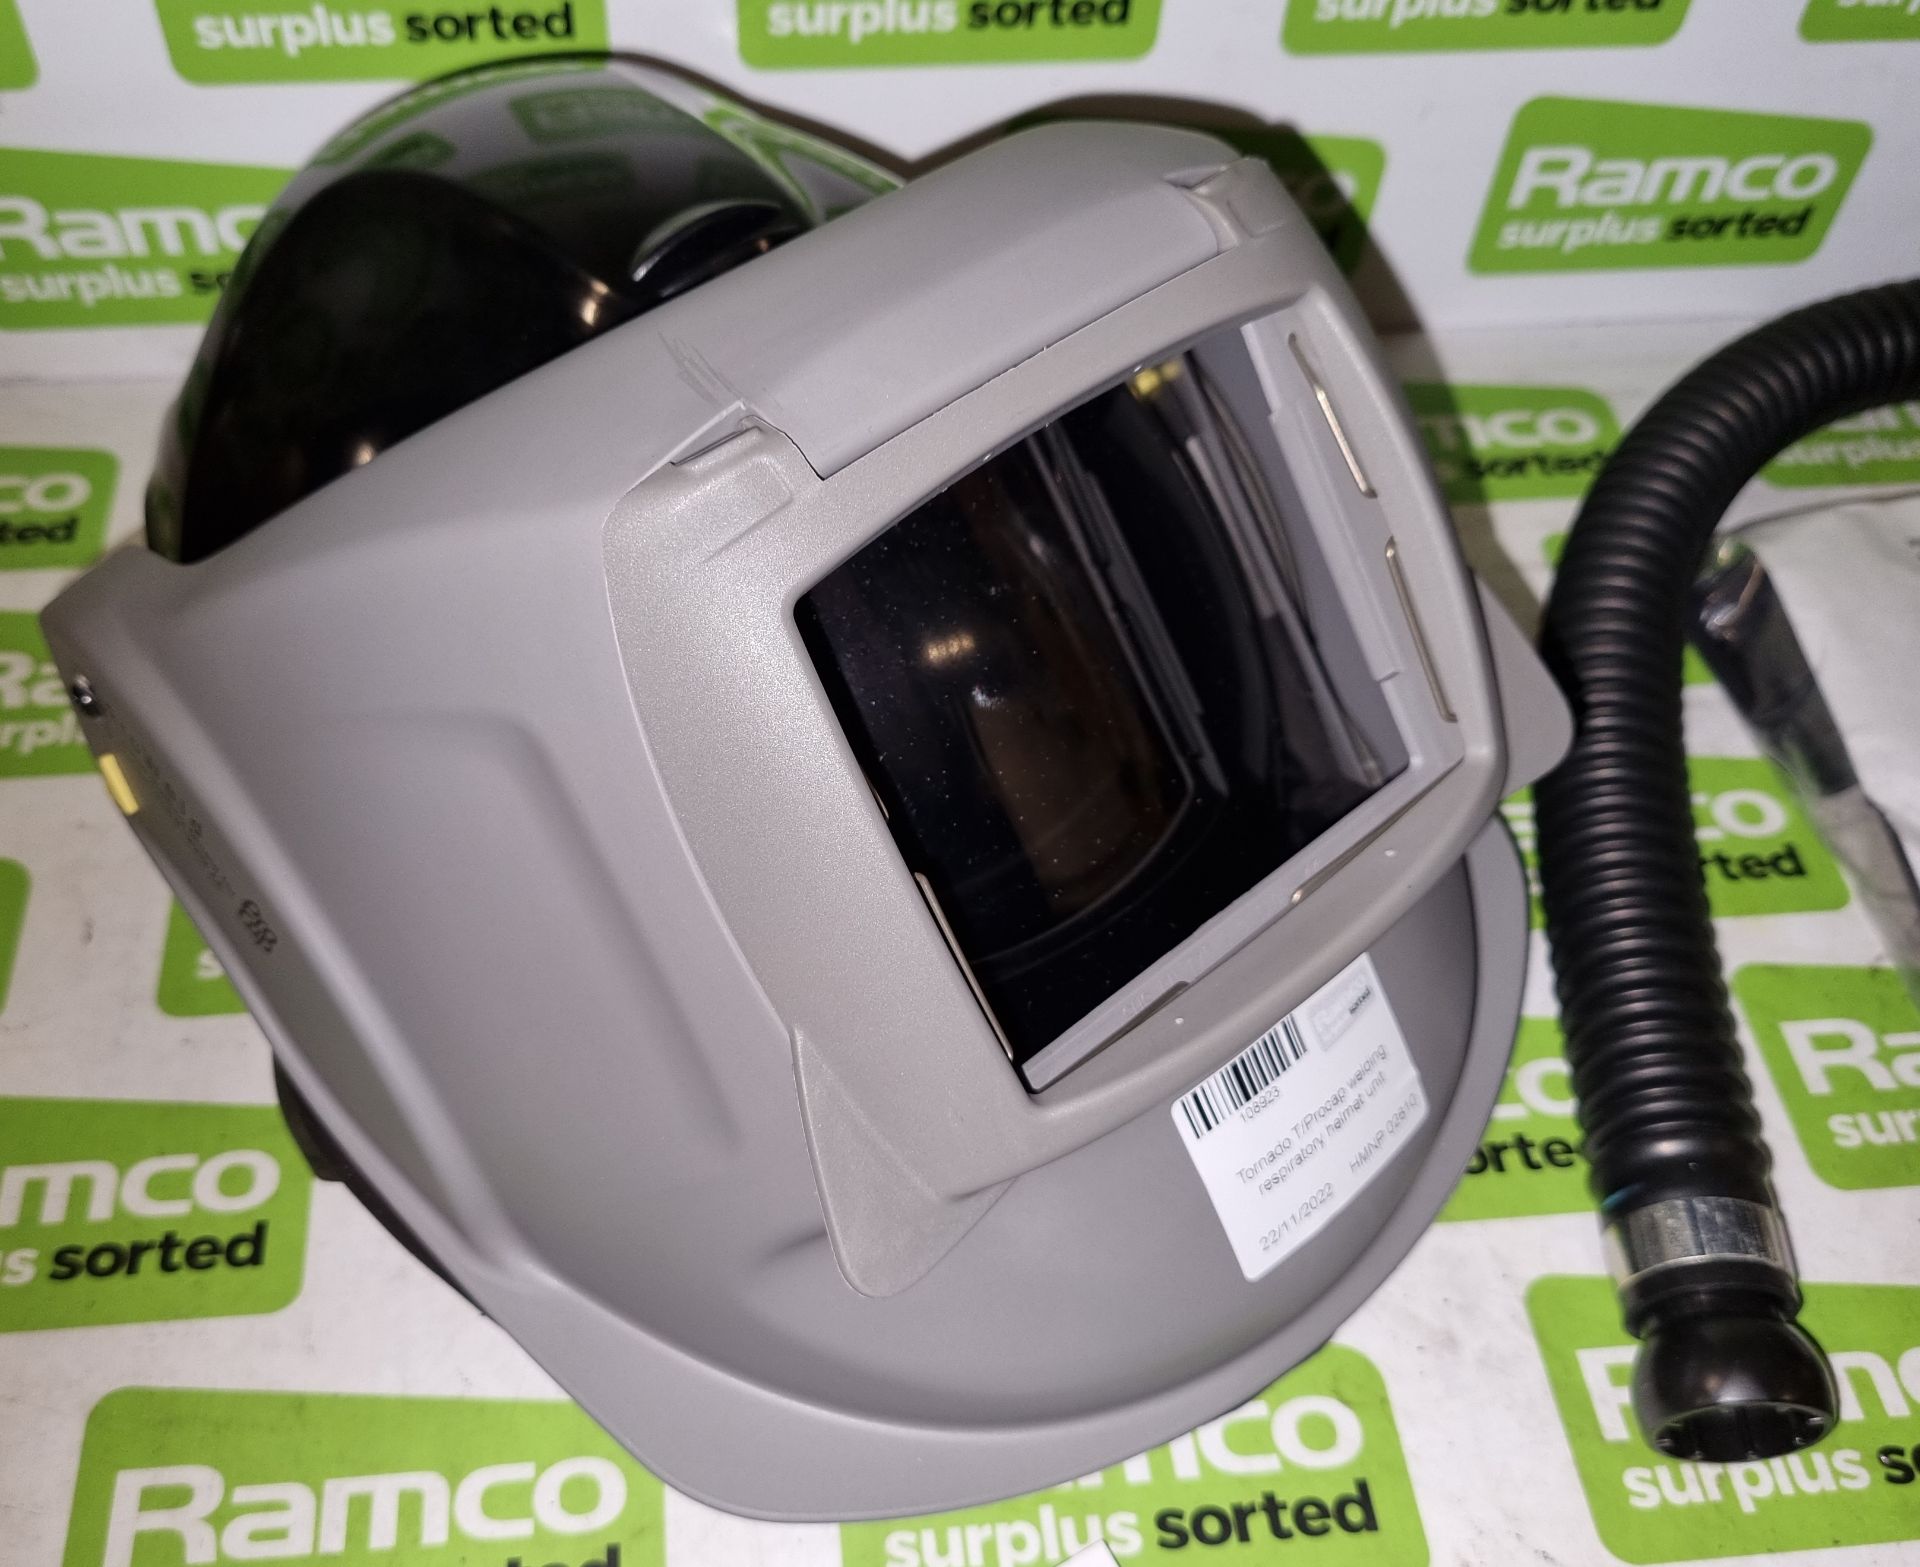 Tornado T / Procap welding respiratory helmet unit, Scott Safety ADF - Auto Darkening filter 2500V - Image 2 of 5